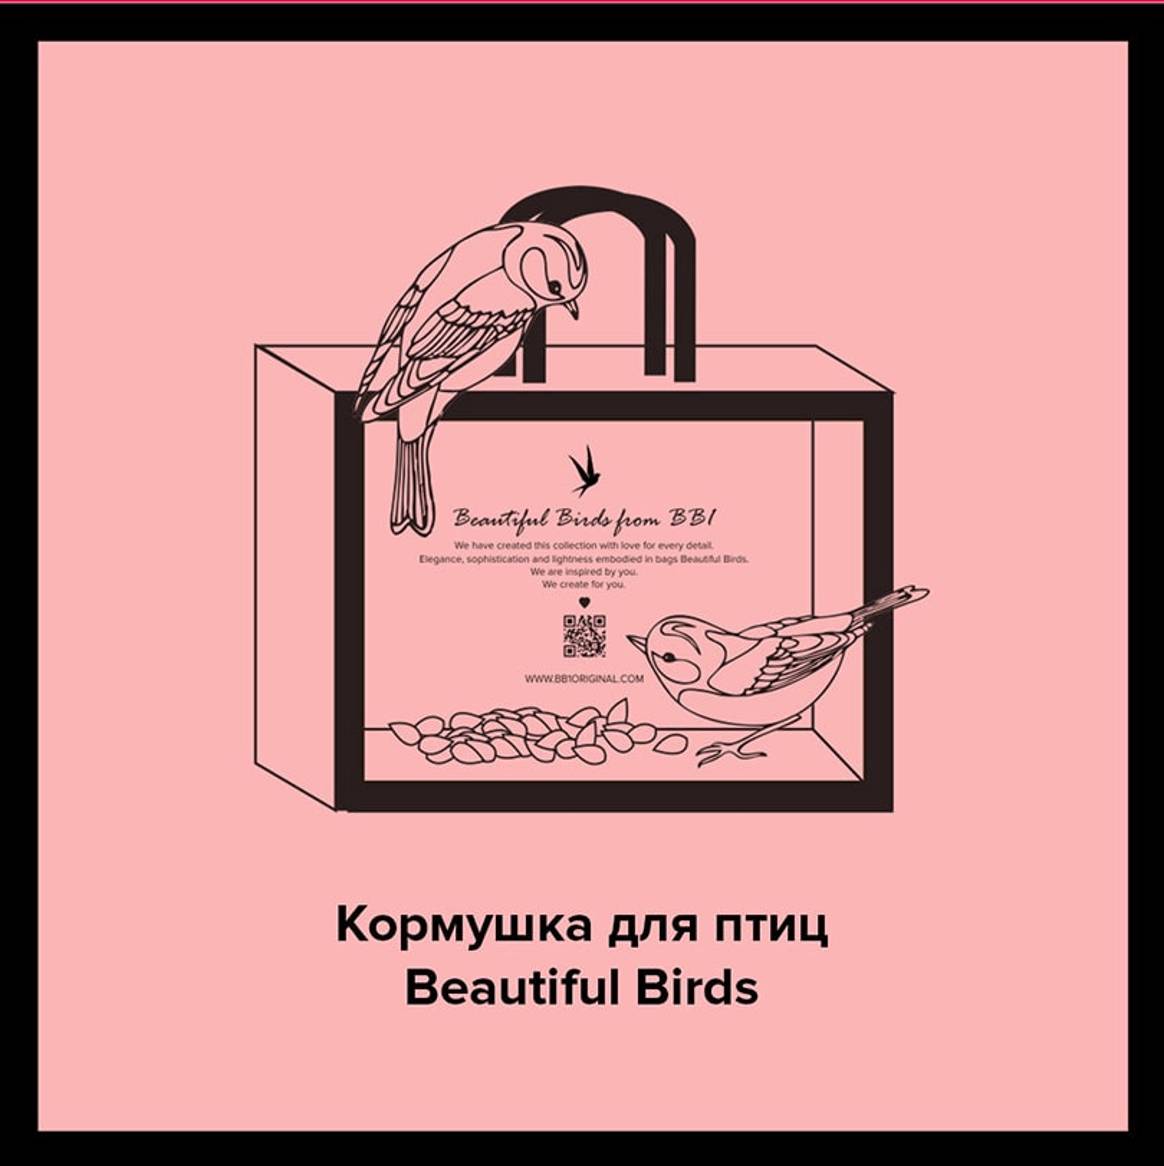 Beautiful Birds создали из коробок кормушки для птиц